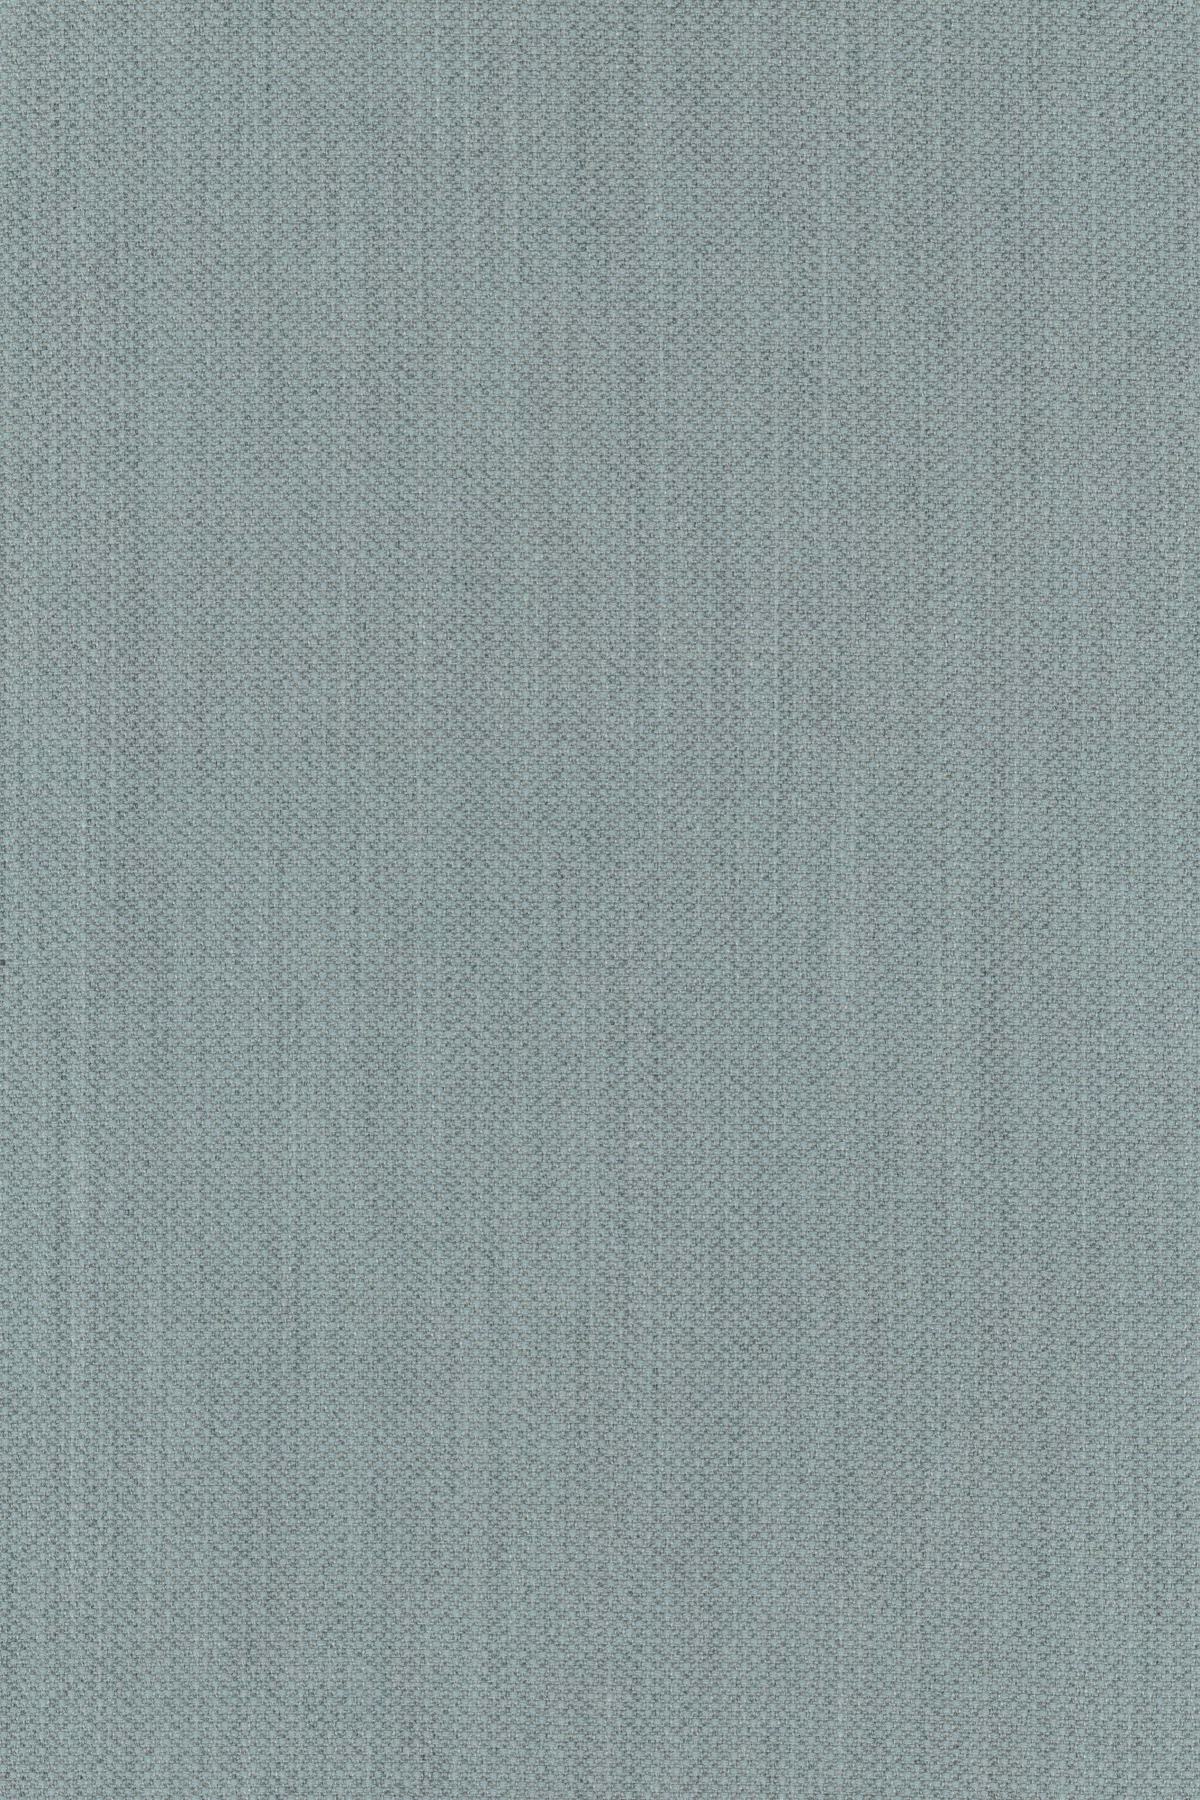 Fabric sample Fiord 721 blue